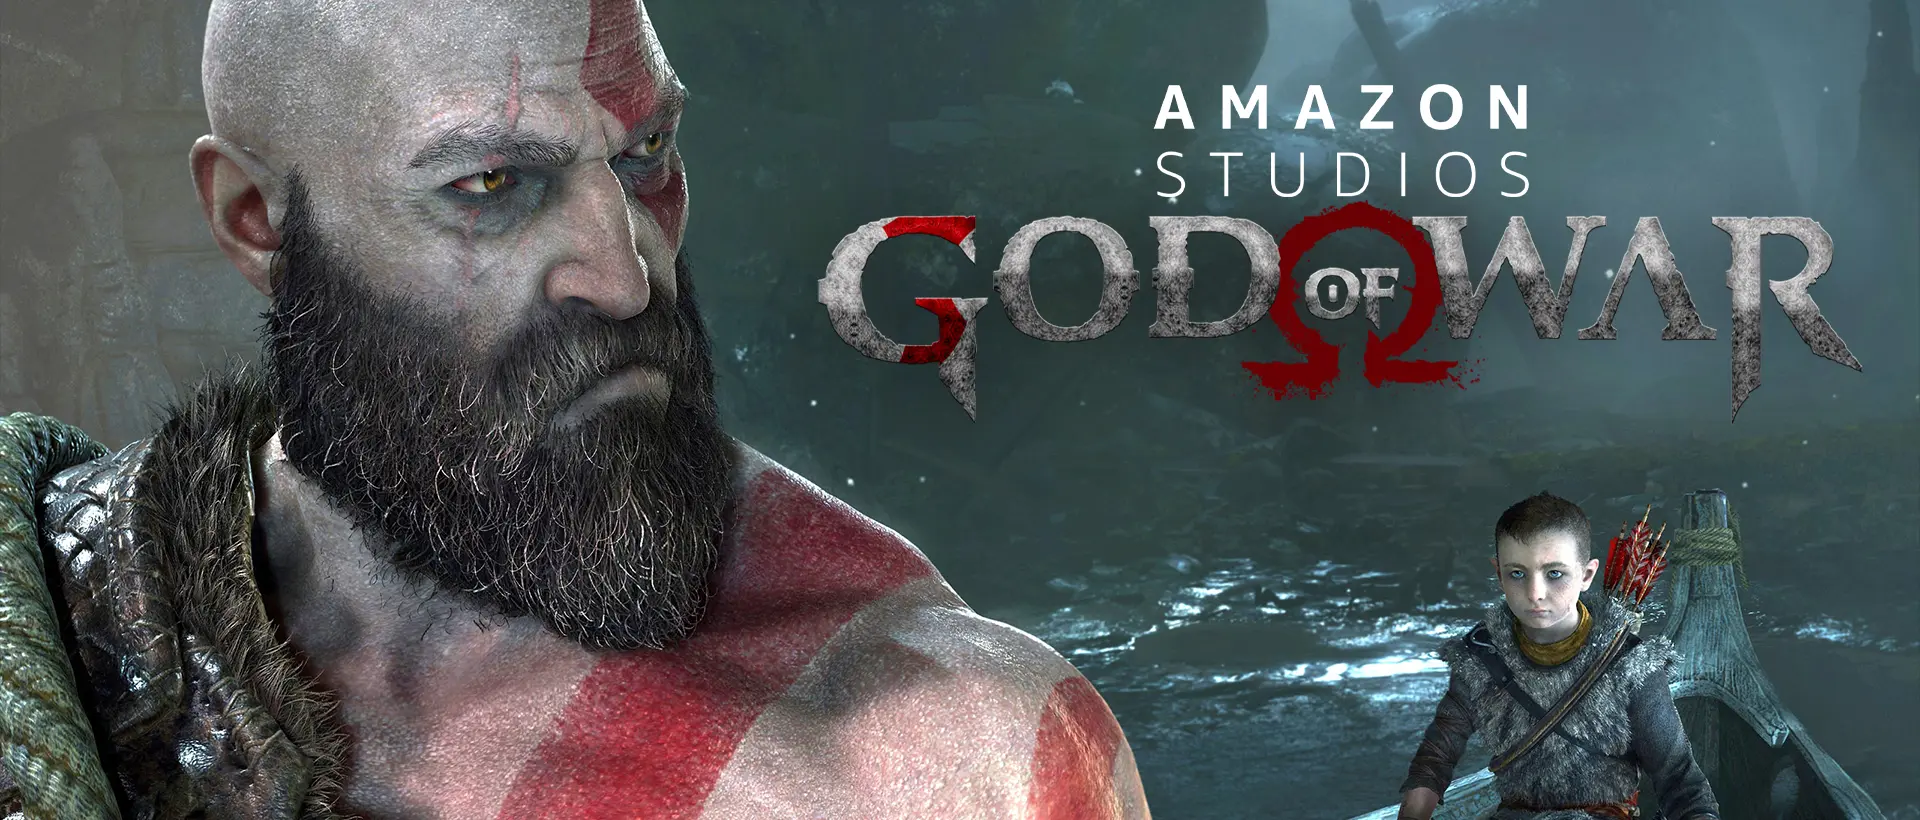 amazon studios god of war2018 video game banner